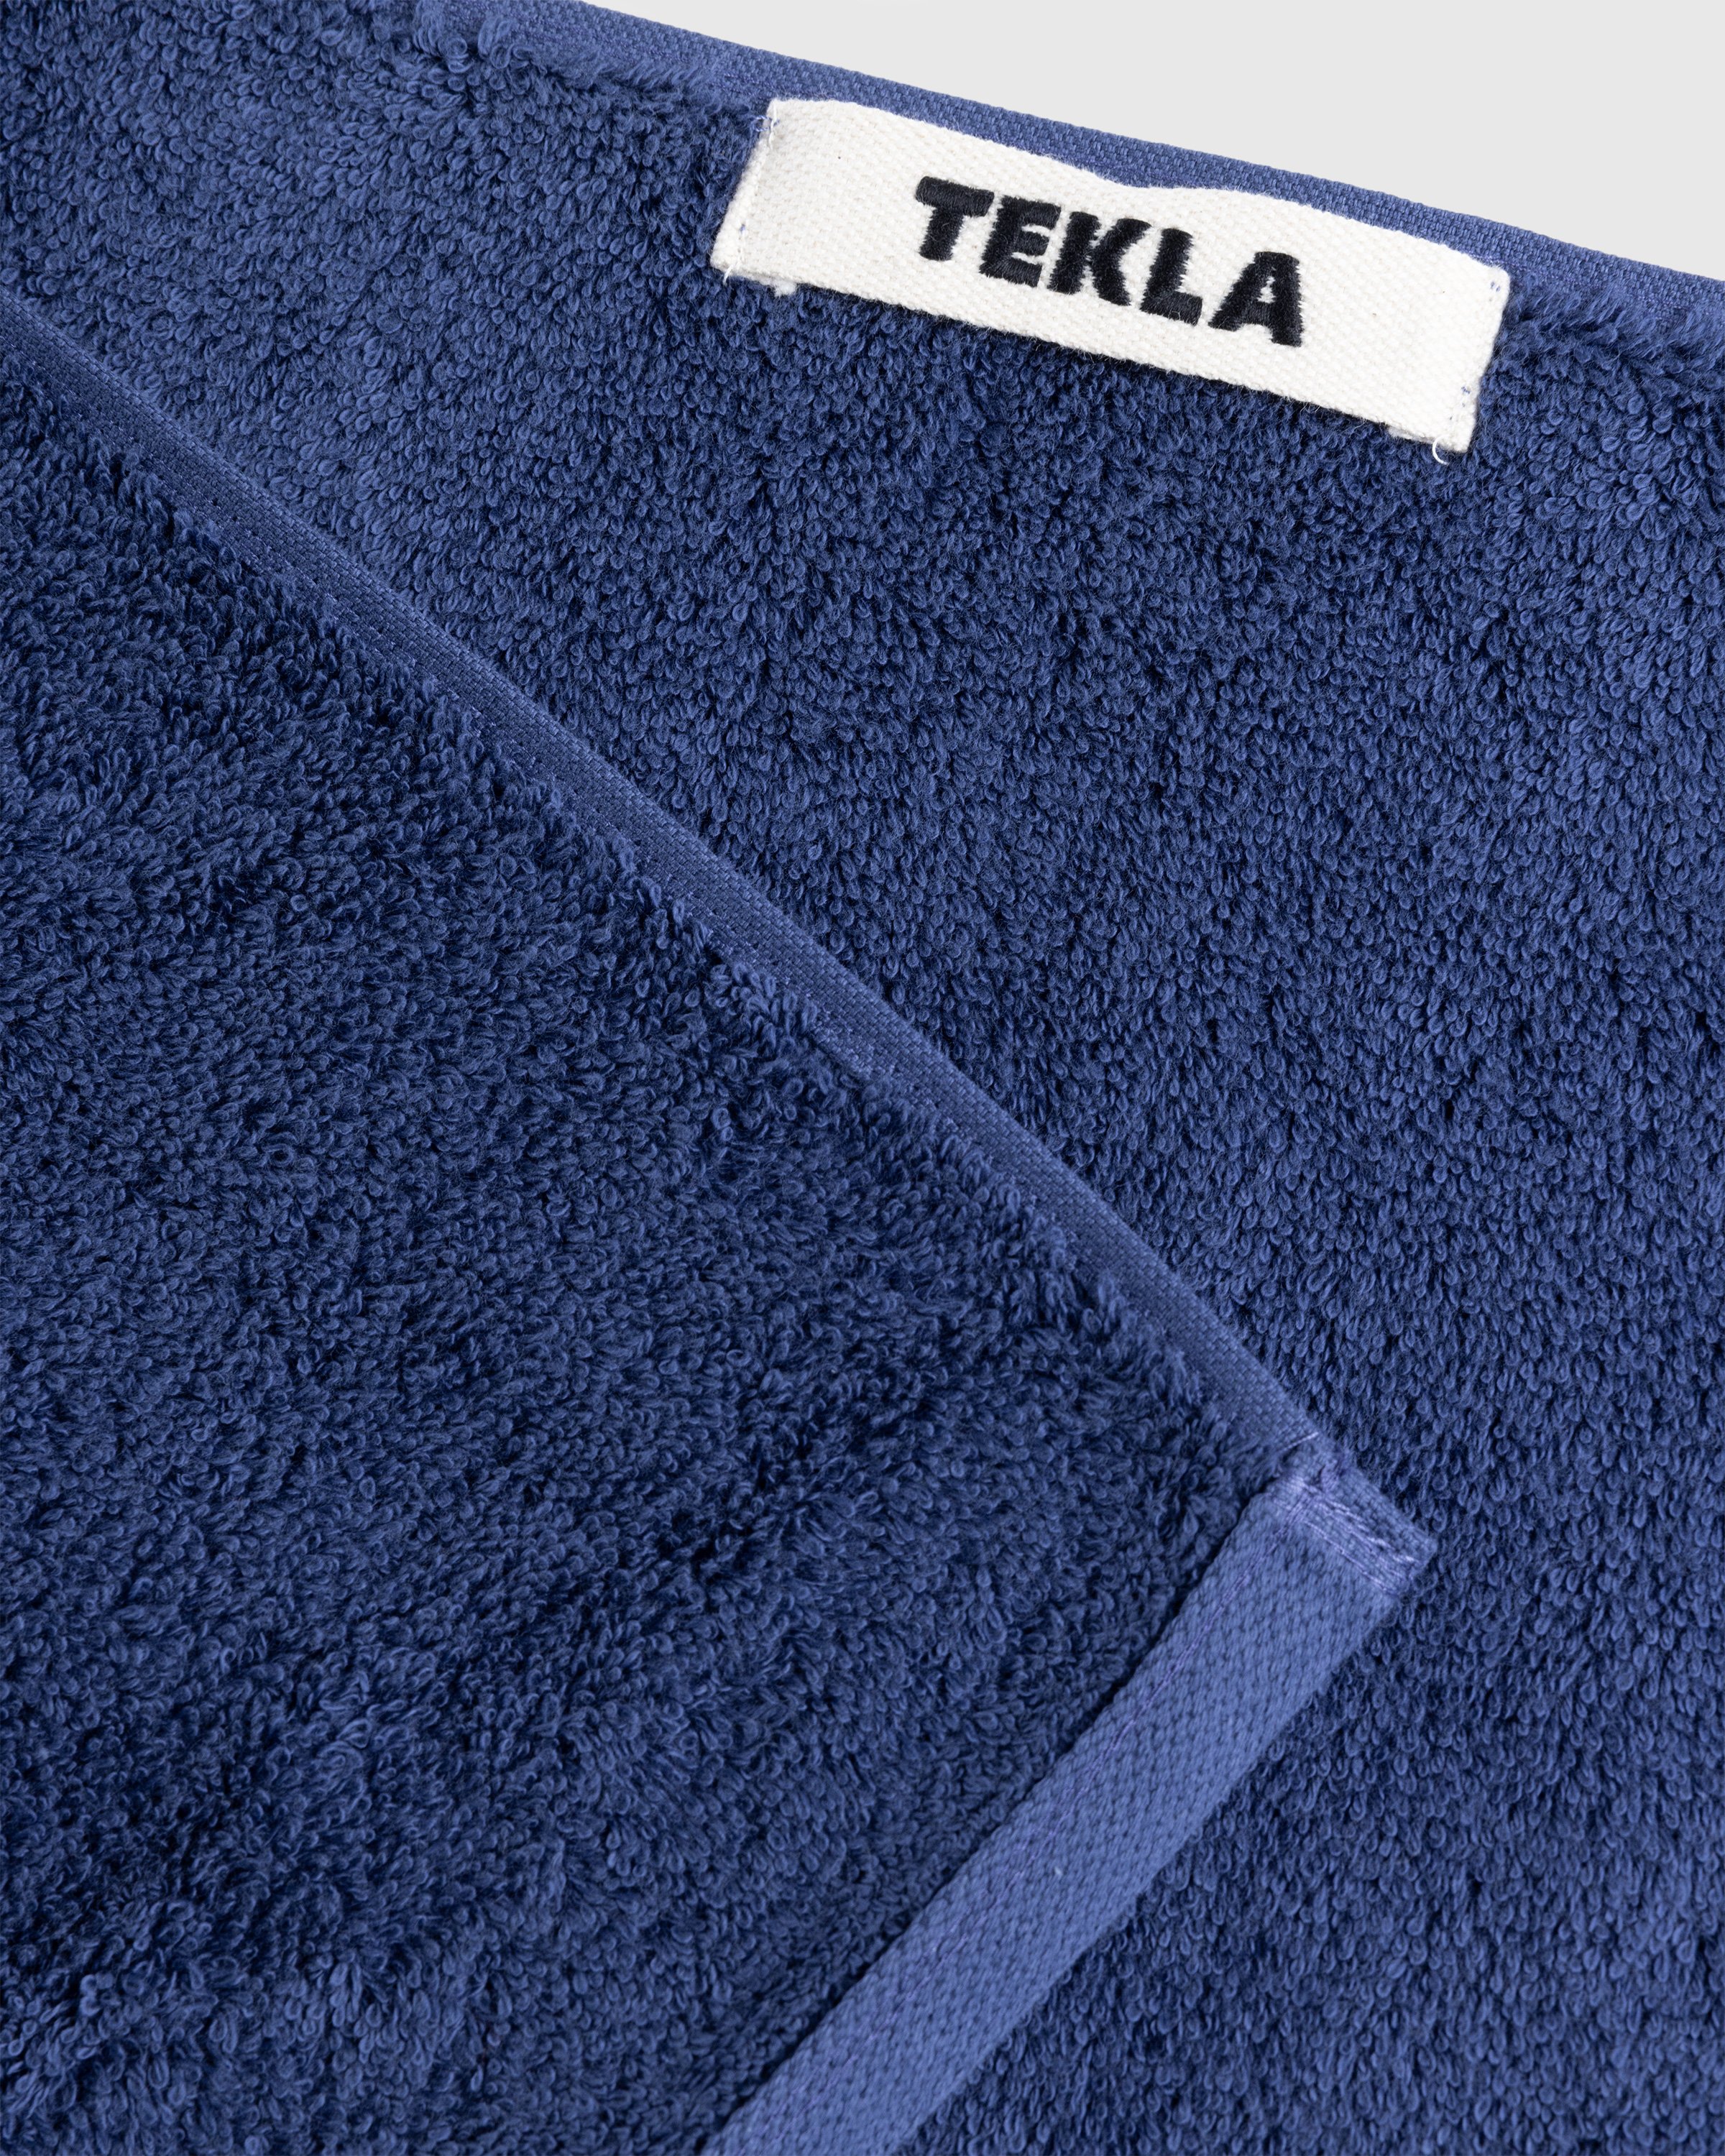 Tekla - Bath Towel 70x140 Navy - Lifestyle - Blue - Image 3